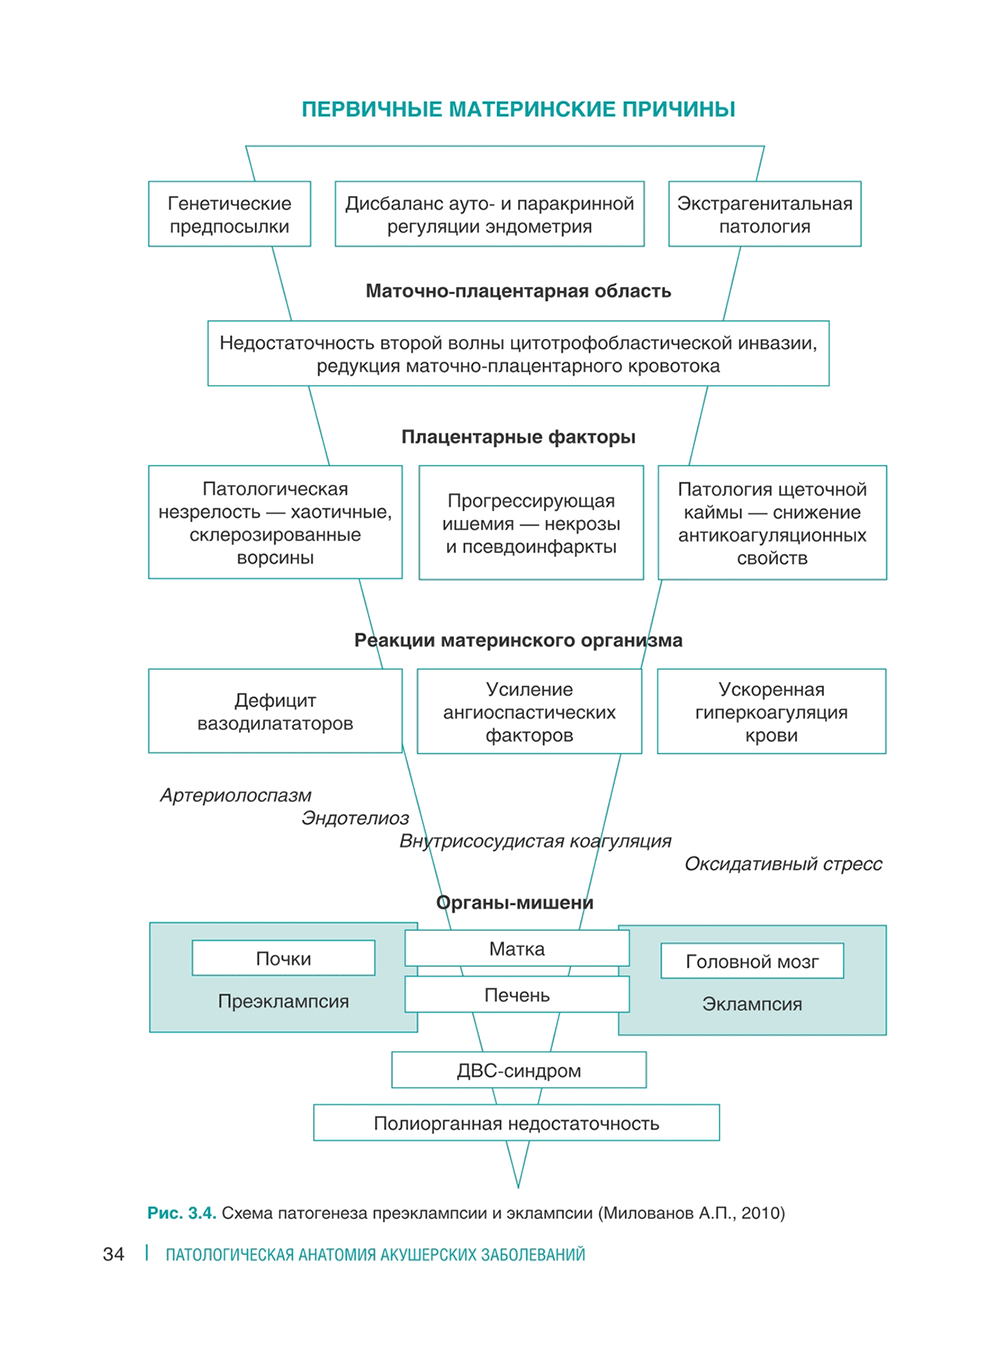 Схема патогенеза преэклампсии и эклампсии